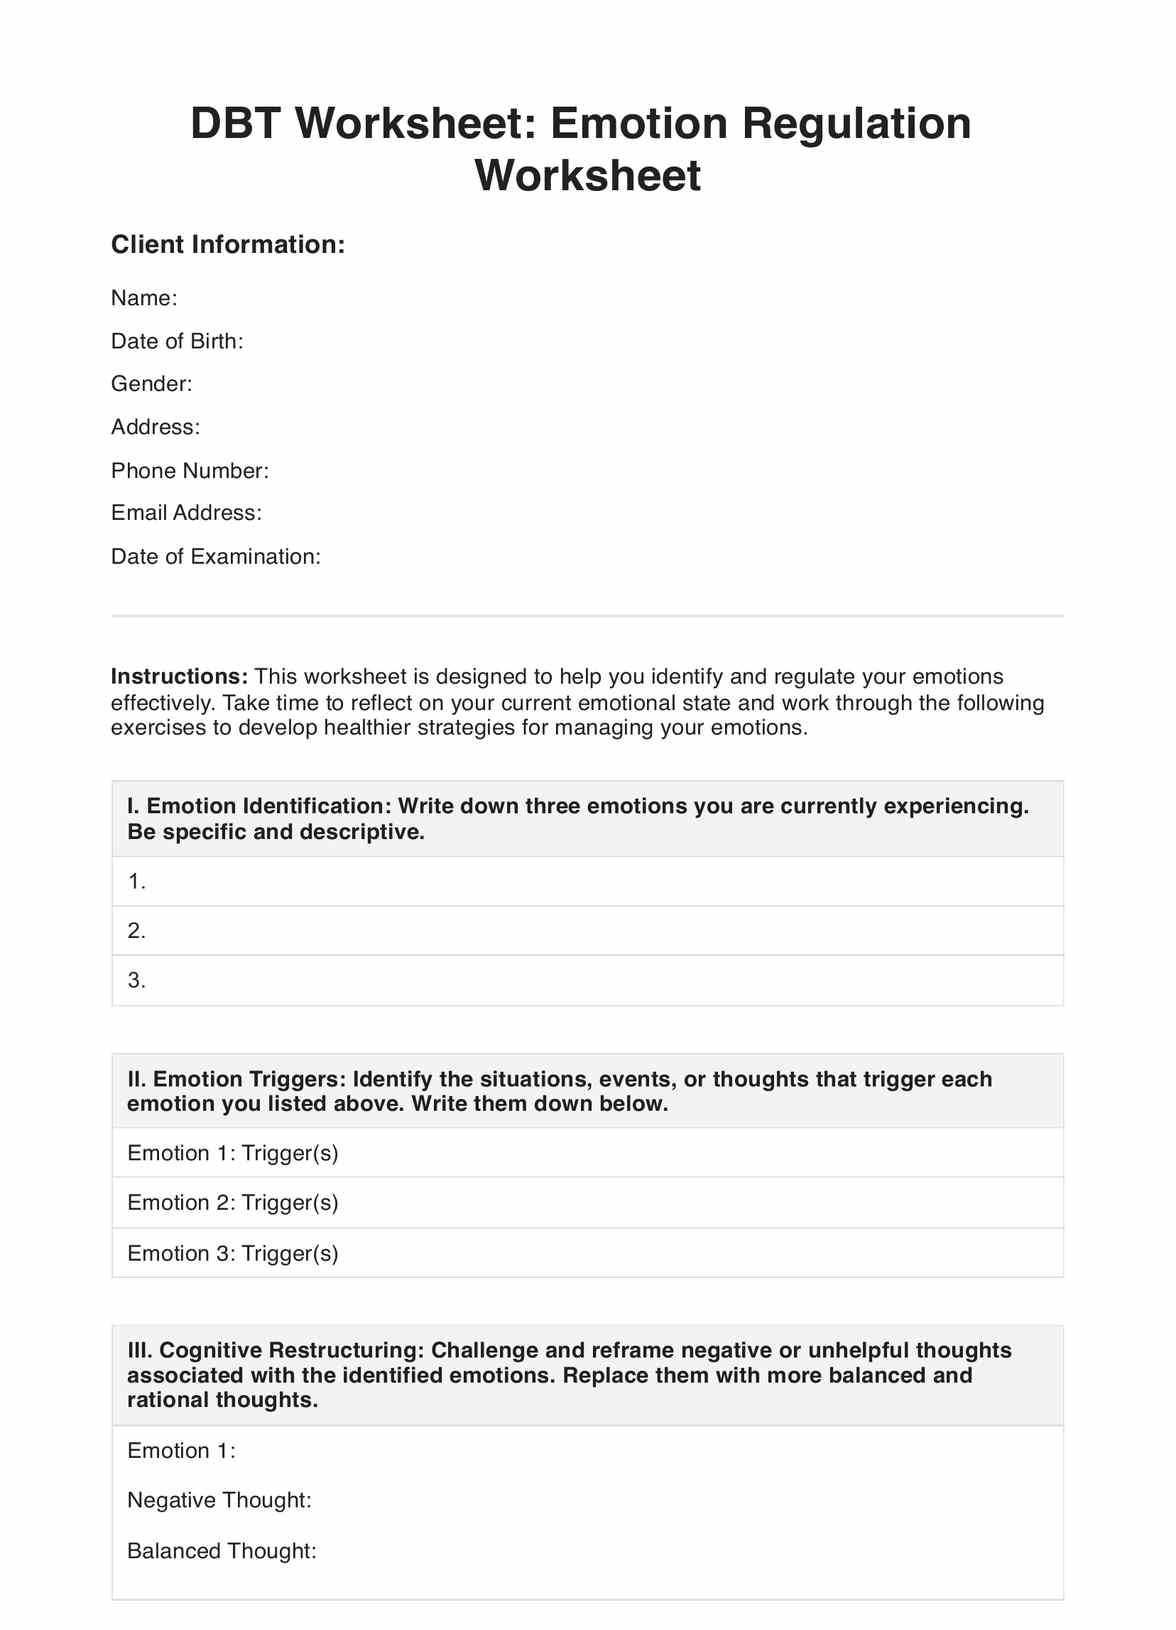 DBT Worksheets PDF Example